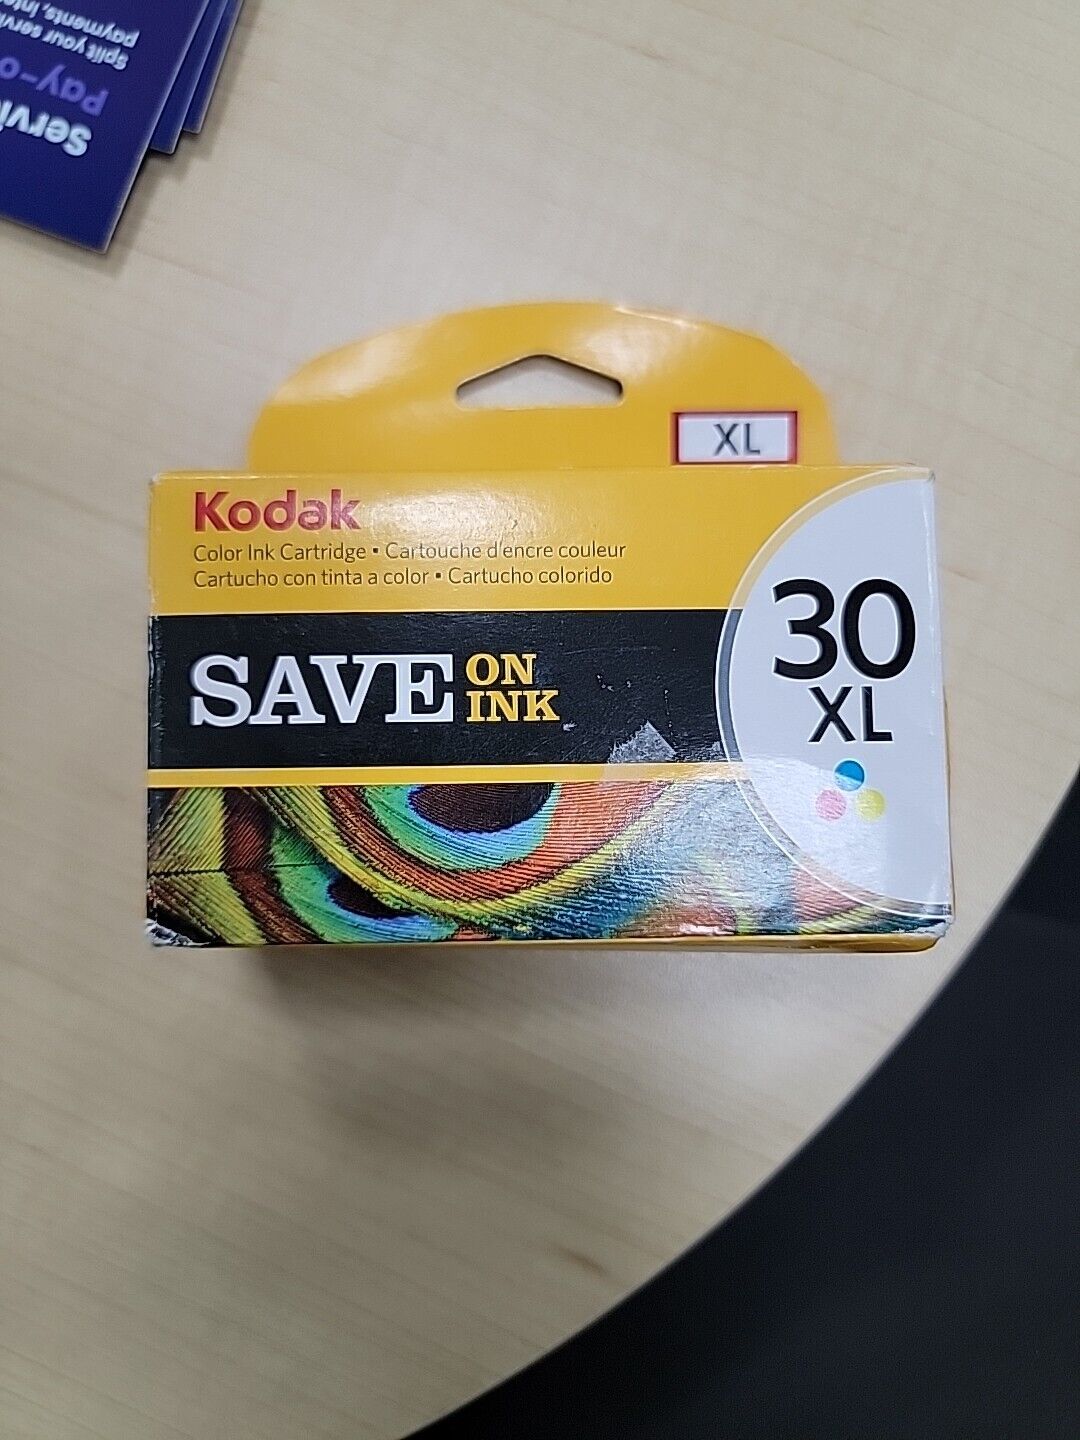 Kodak 30 XL Color Ink Cartridge - GENUINE, New sealed